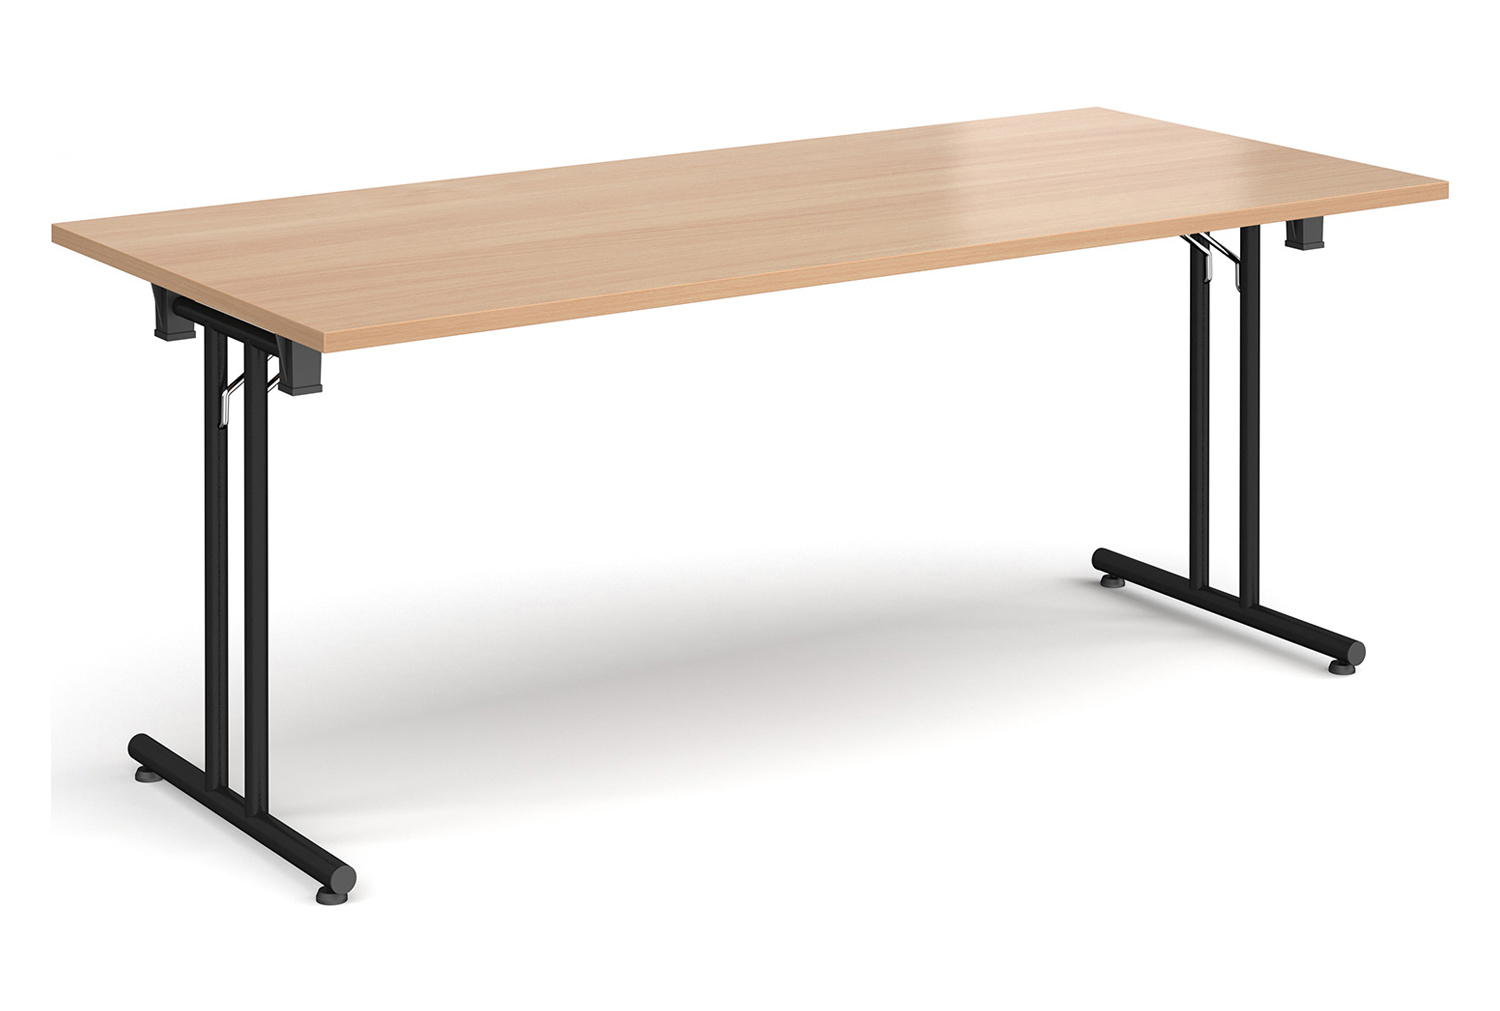 Durand Rectangular Folding Table, 180wx80dx73h (cm), Black Frame, Beech